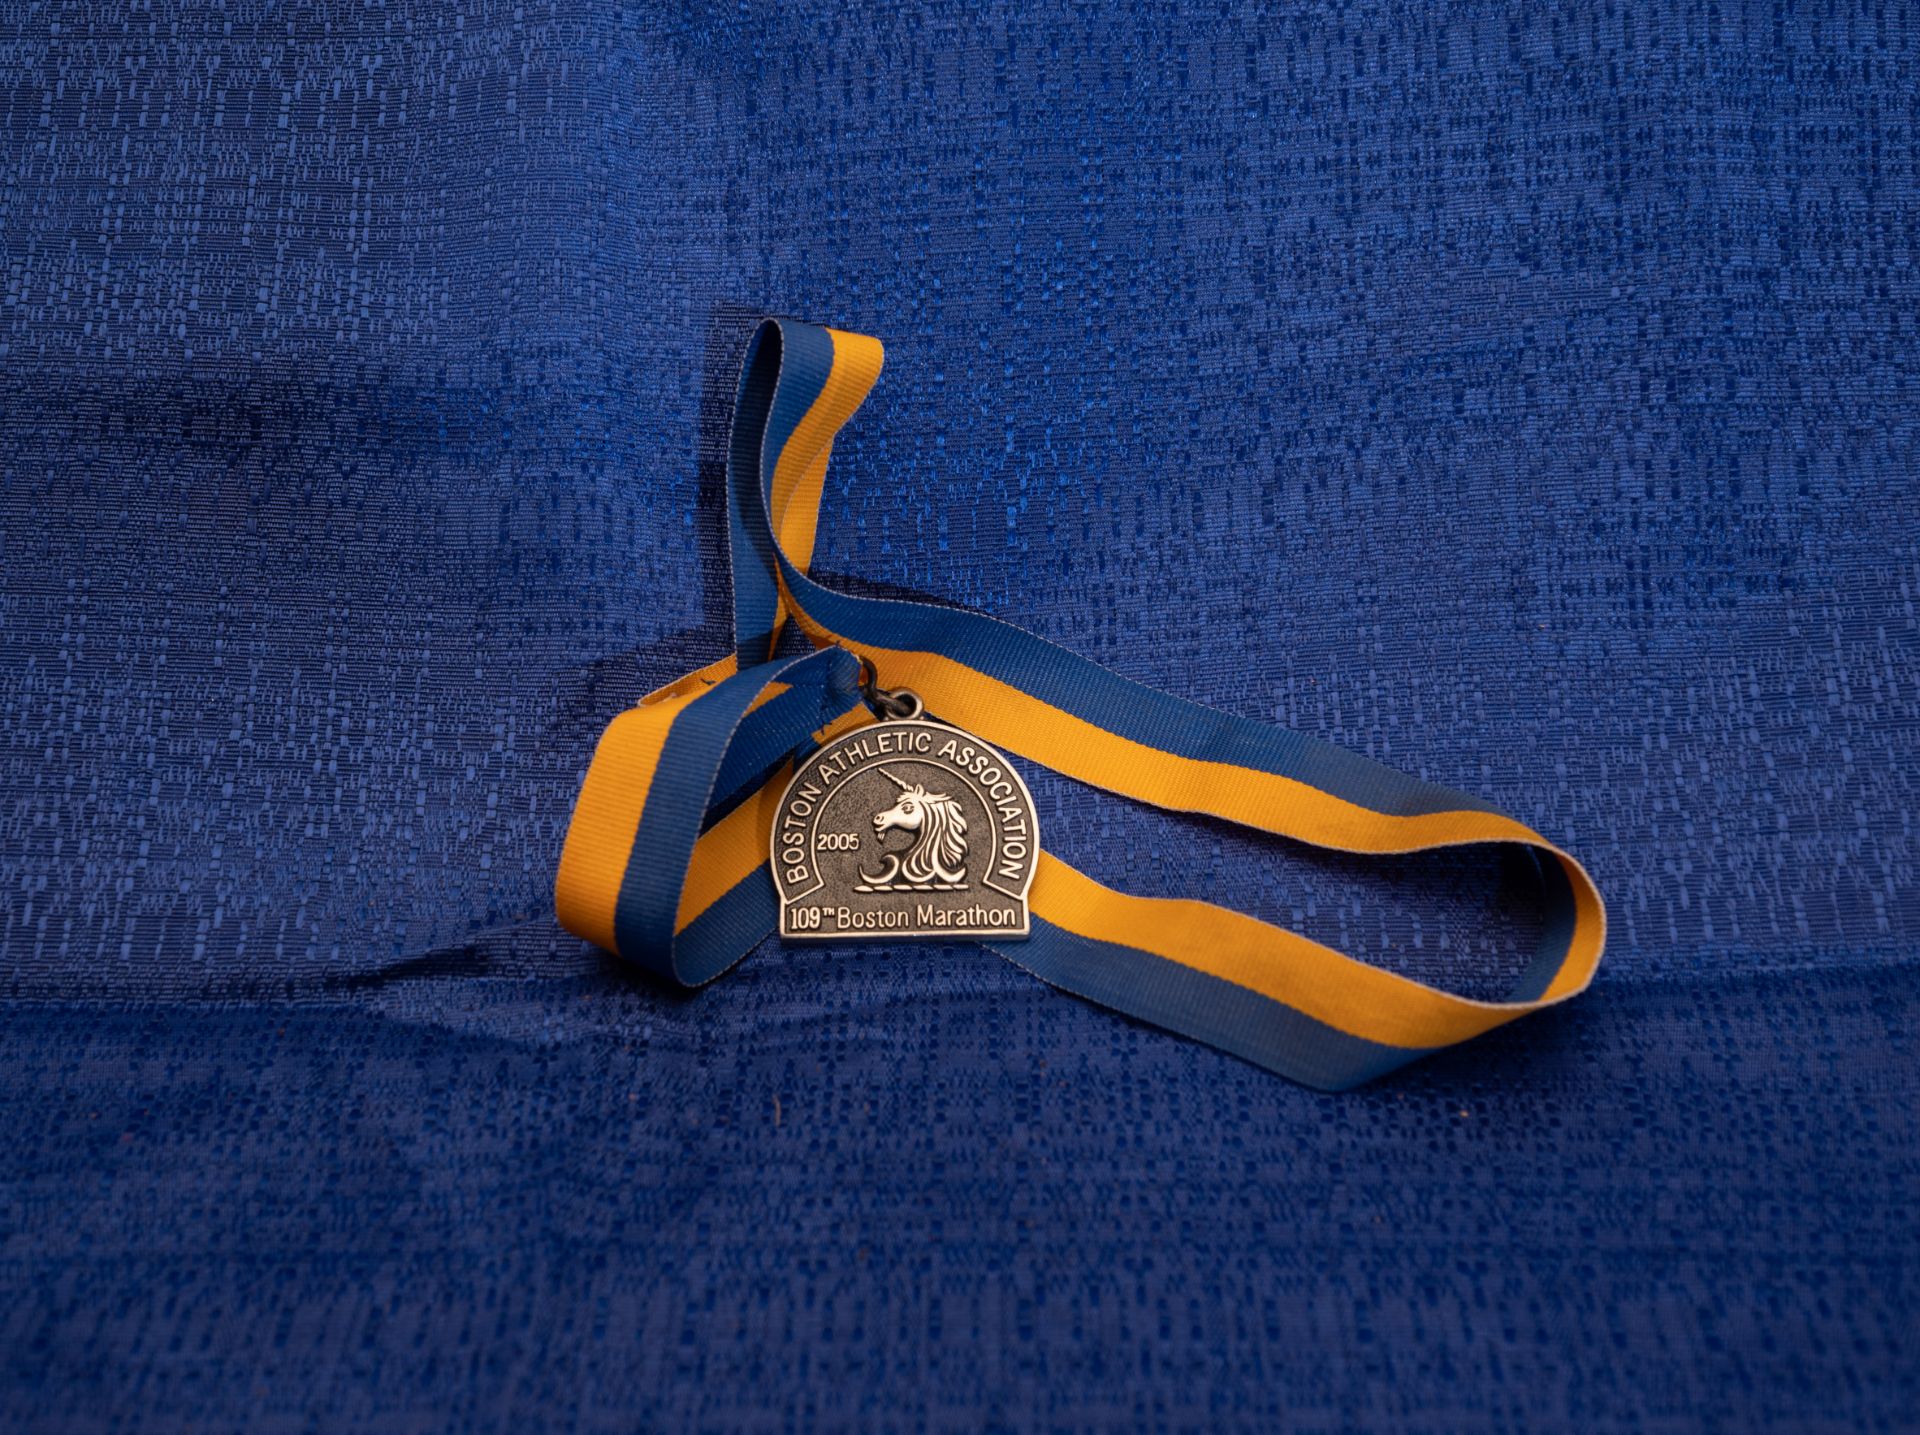 2005 BAA 109th Boston Marathon Medal